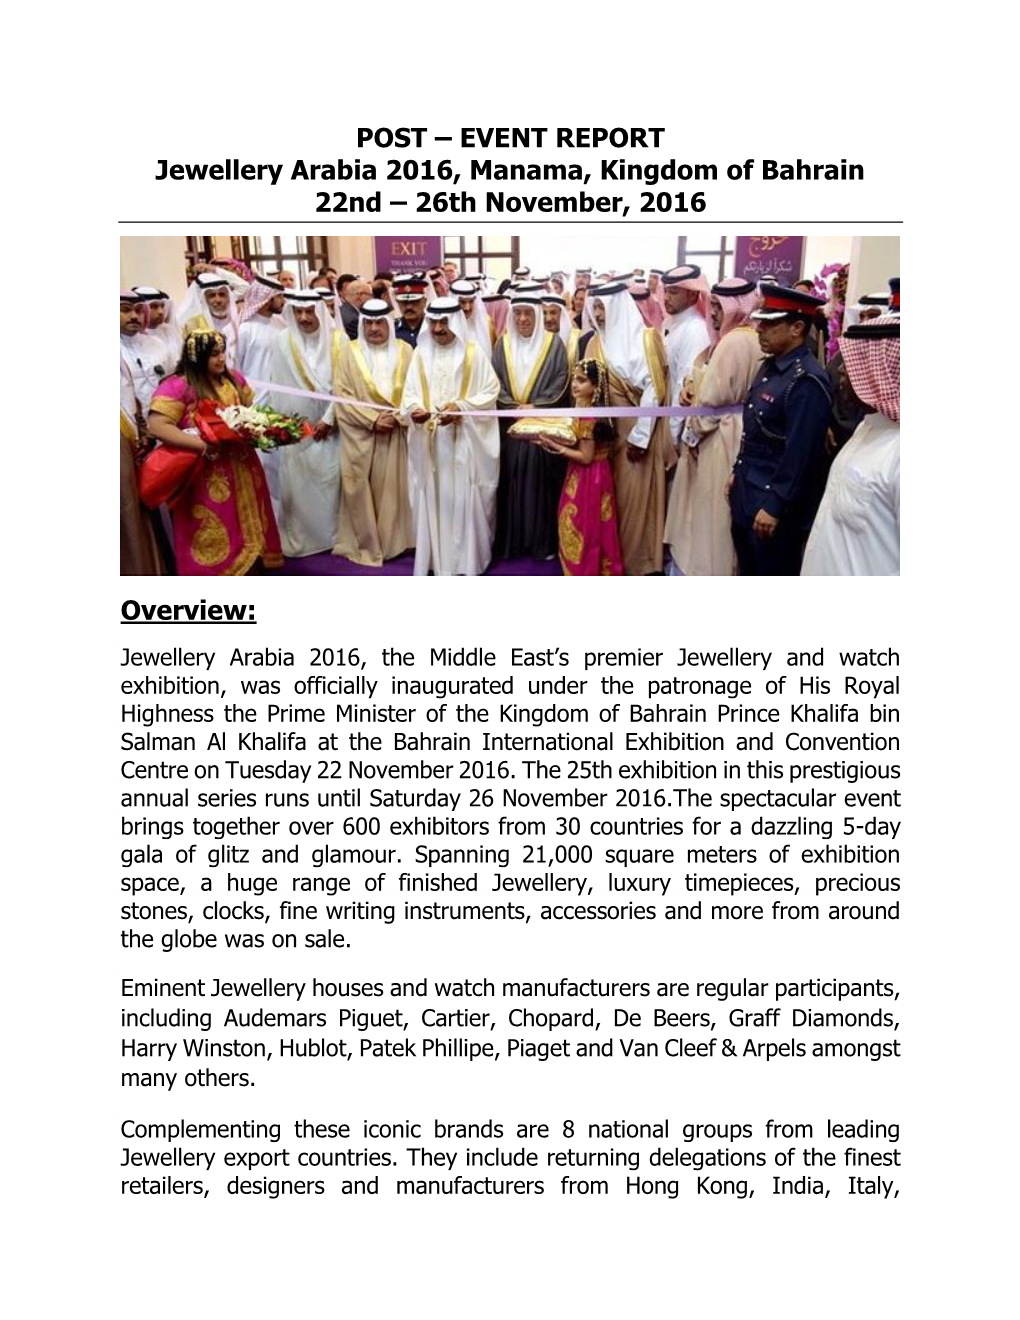 POST – EVENT REPORT Jewellery Arabia 2016, Manama, Kingdom of Bahrain 22Nd – 26Th November, 2016